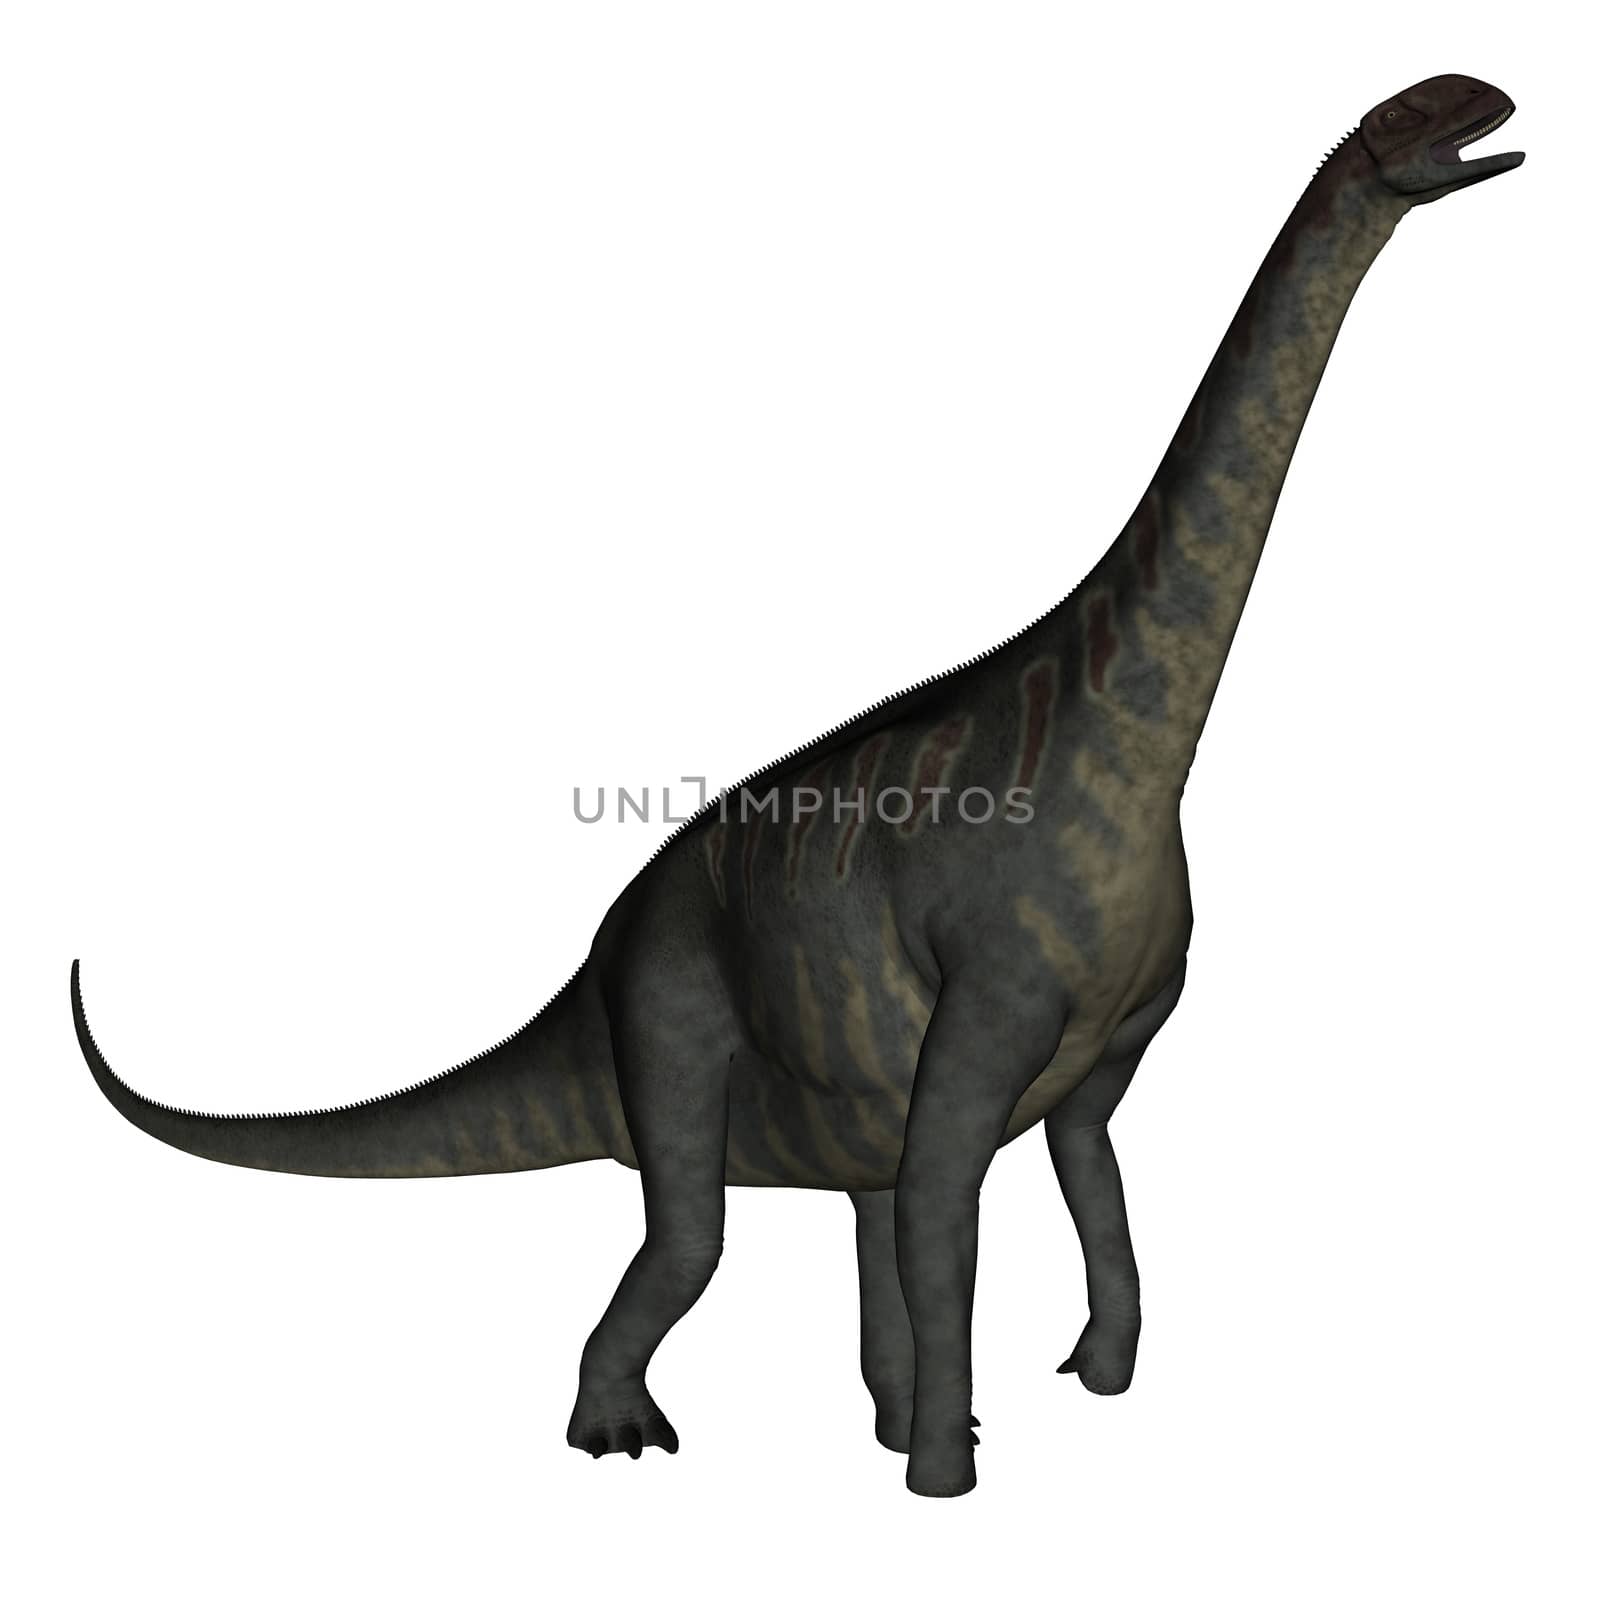 Jobaria dinosaur walking - 3D render by Elenaphotos21